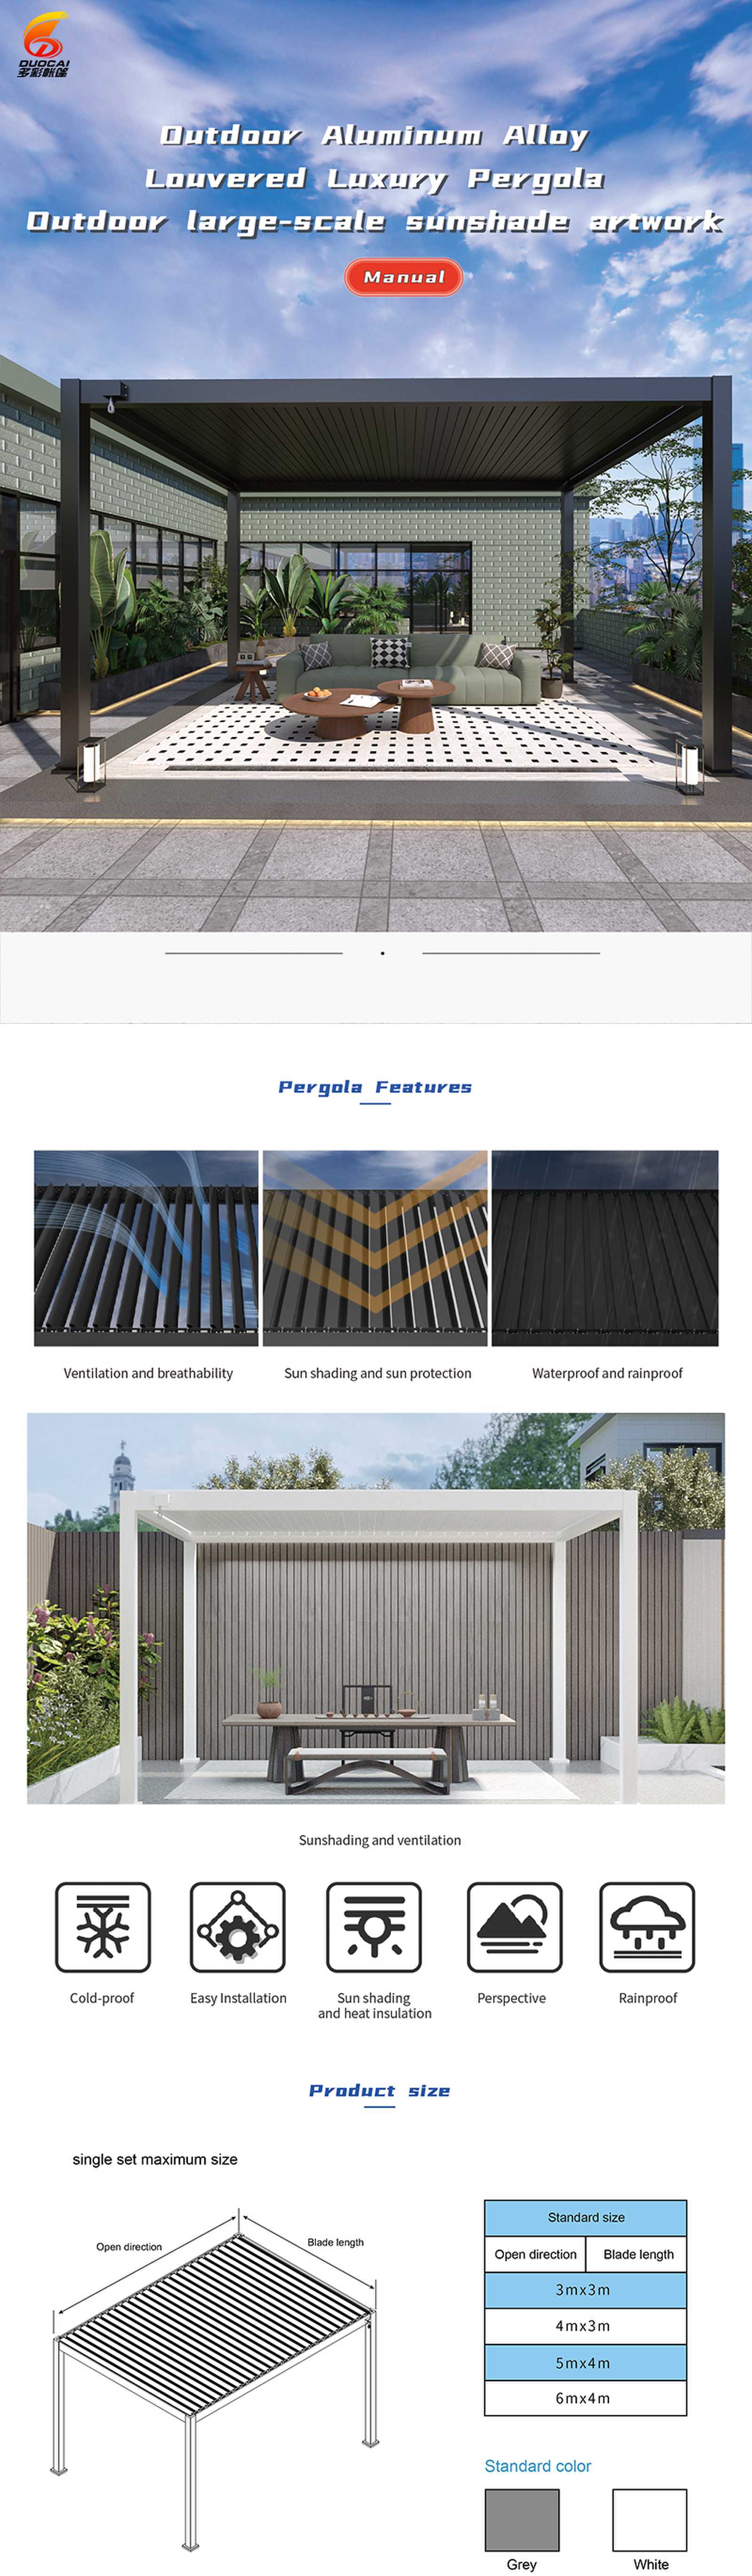 Ventilation and breathability Courtyard pavilion Louvered Pergolas